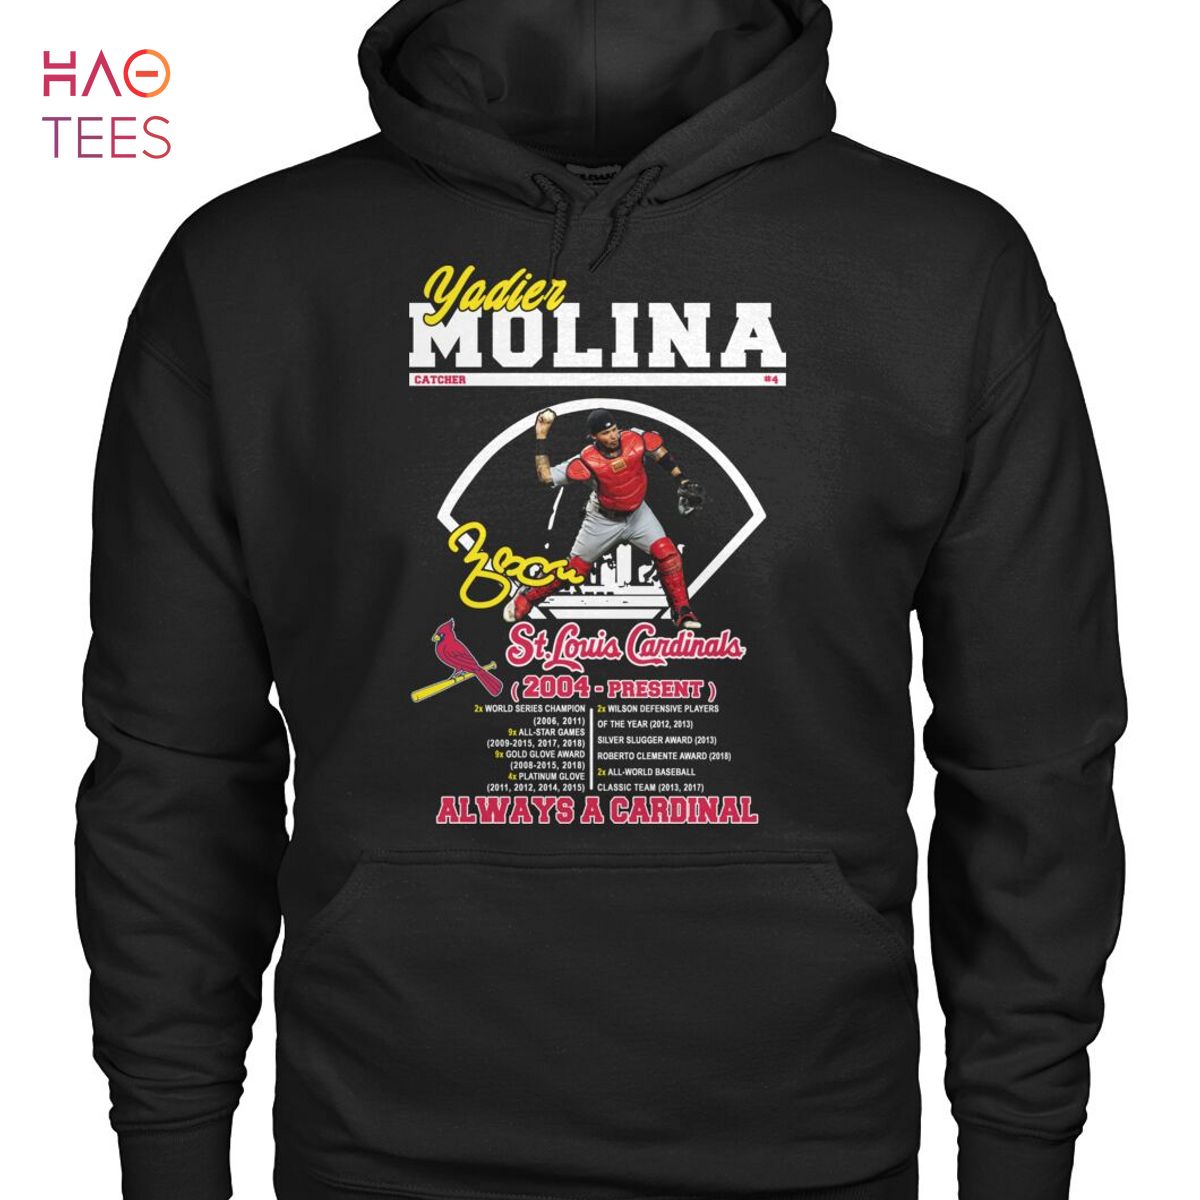 Official Yadier Molina St. Louis Cardinals Jersey, Yadier Molina Shirts, Cardinals  Apparel, Yadier Molina Gear